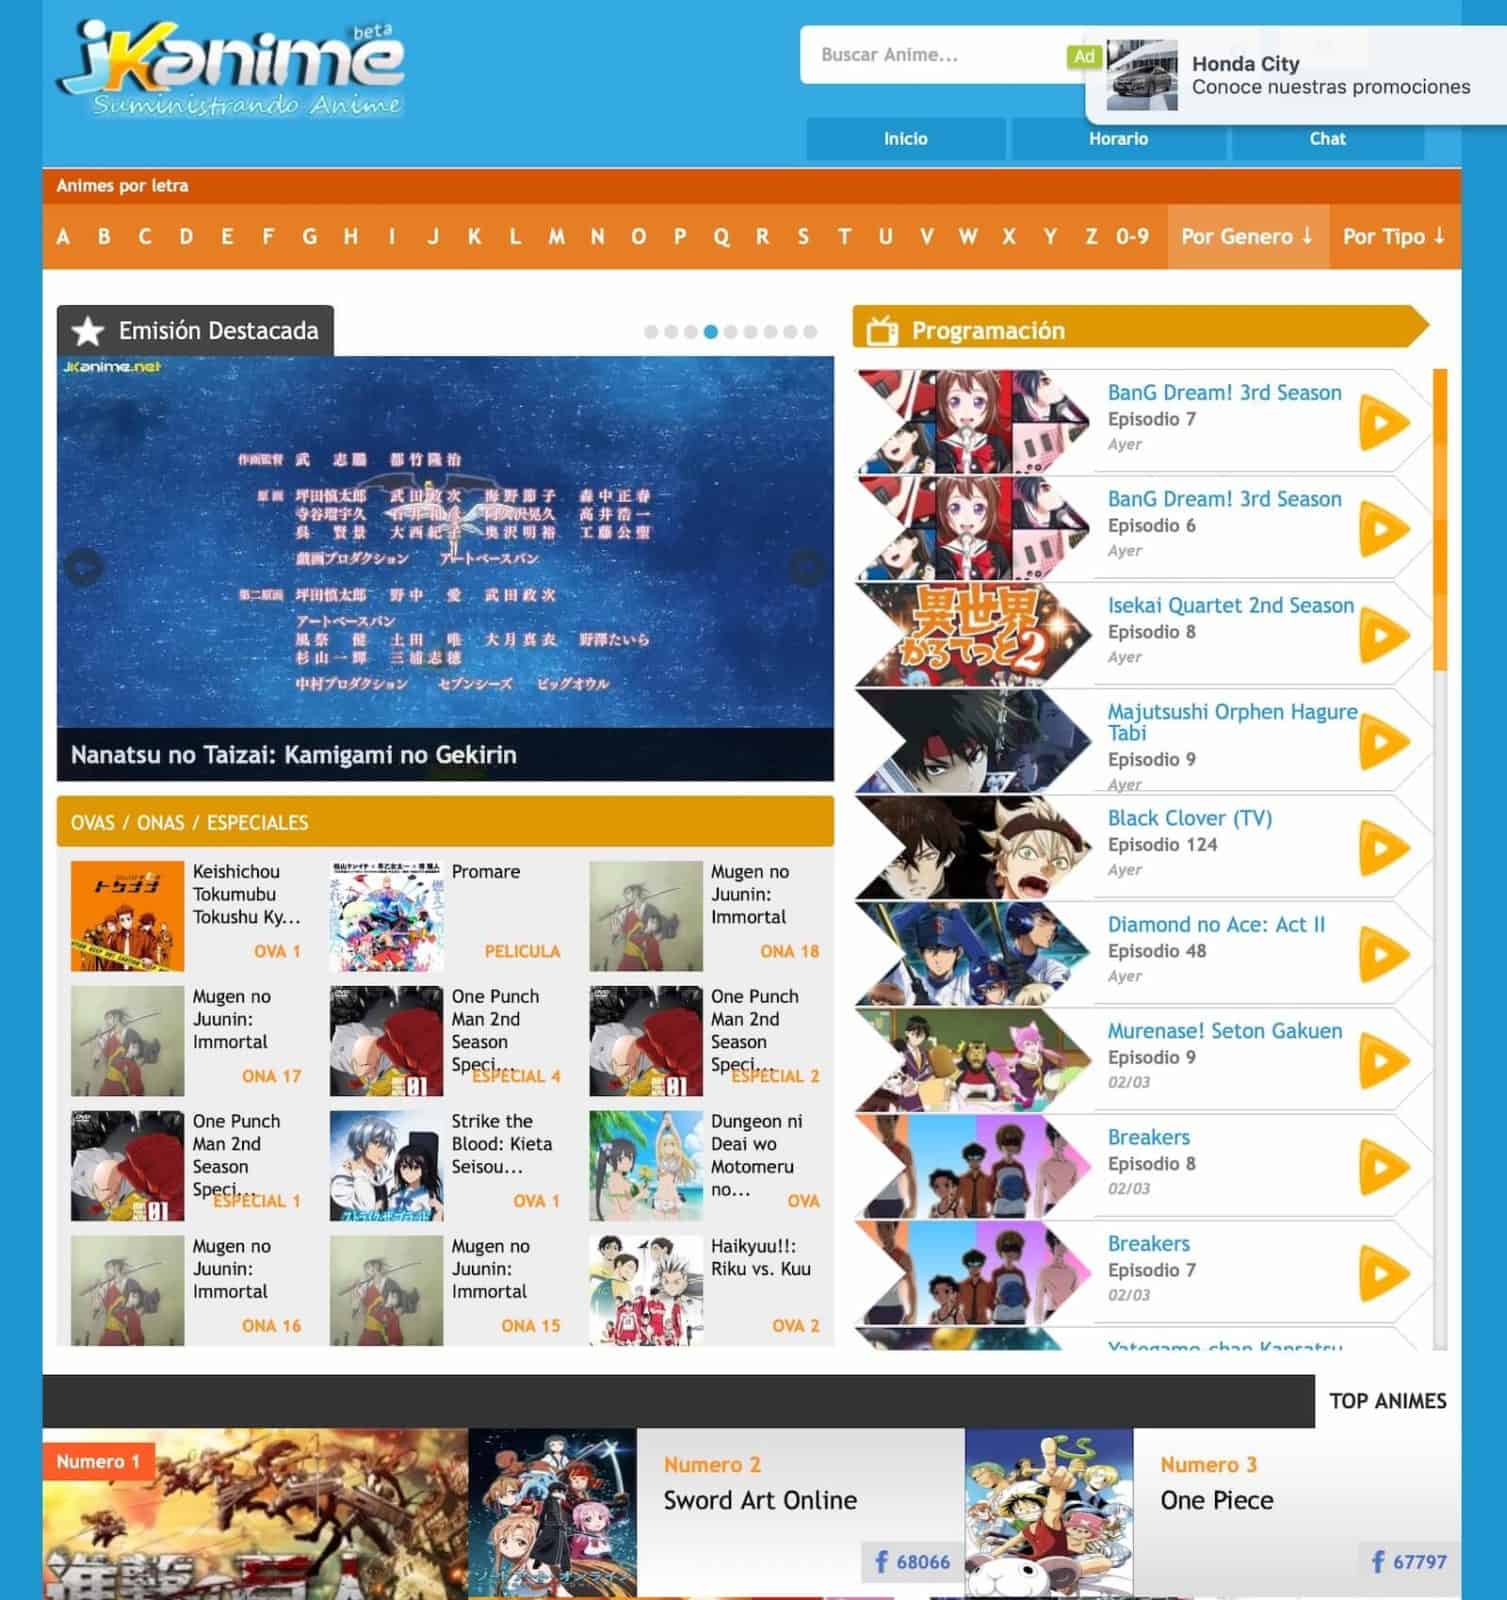 mejores paginas para ver anime online - jkanime